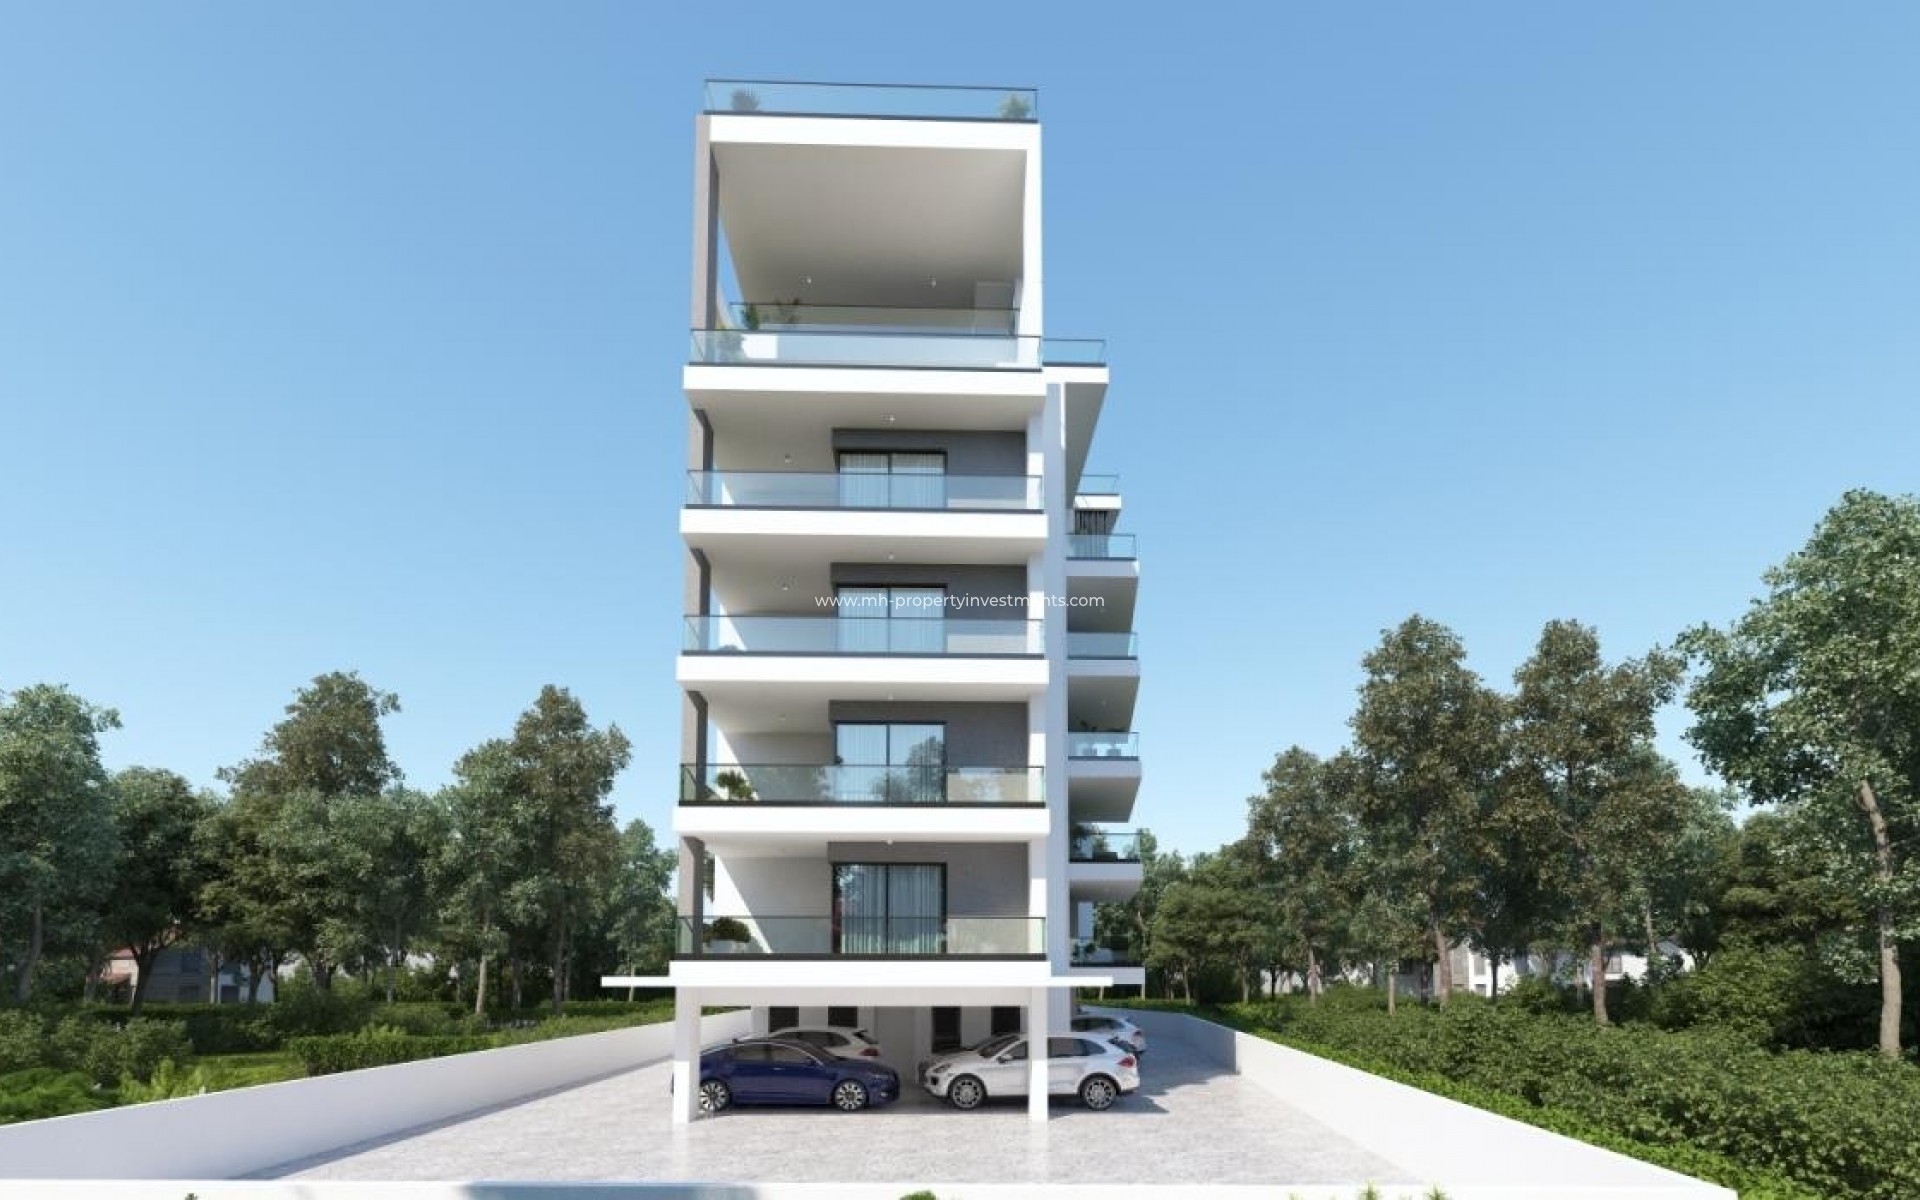 under construction - Apartment - Larnaca - Larnaca (City) - Makenzy